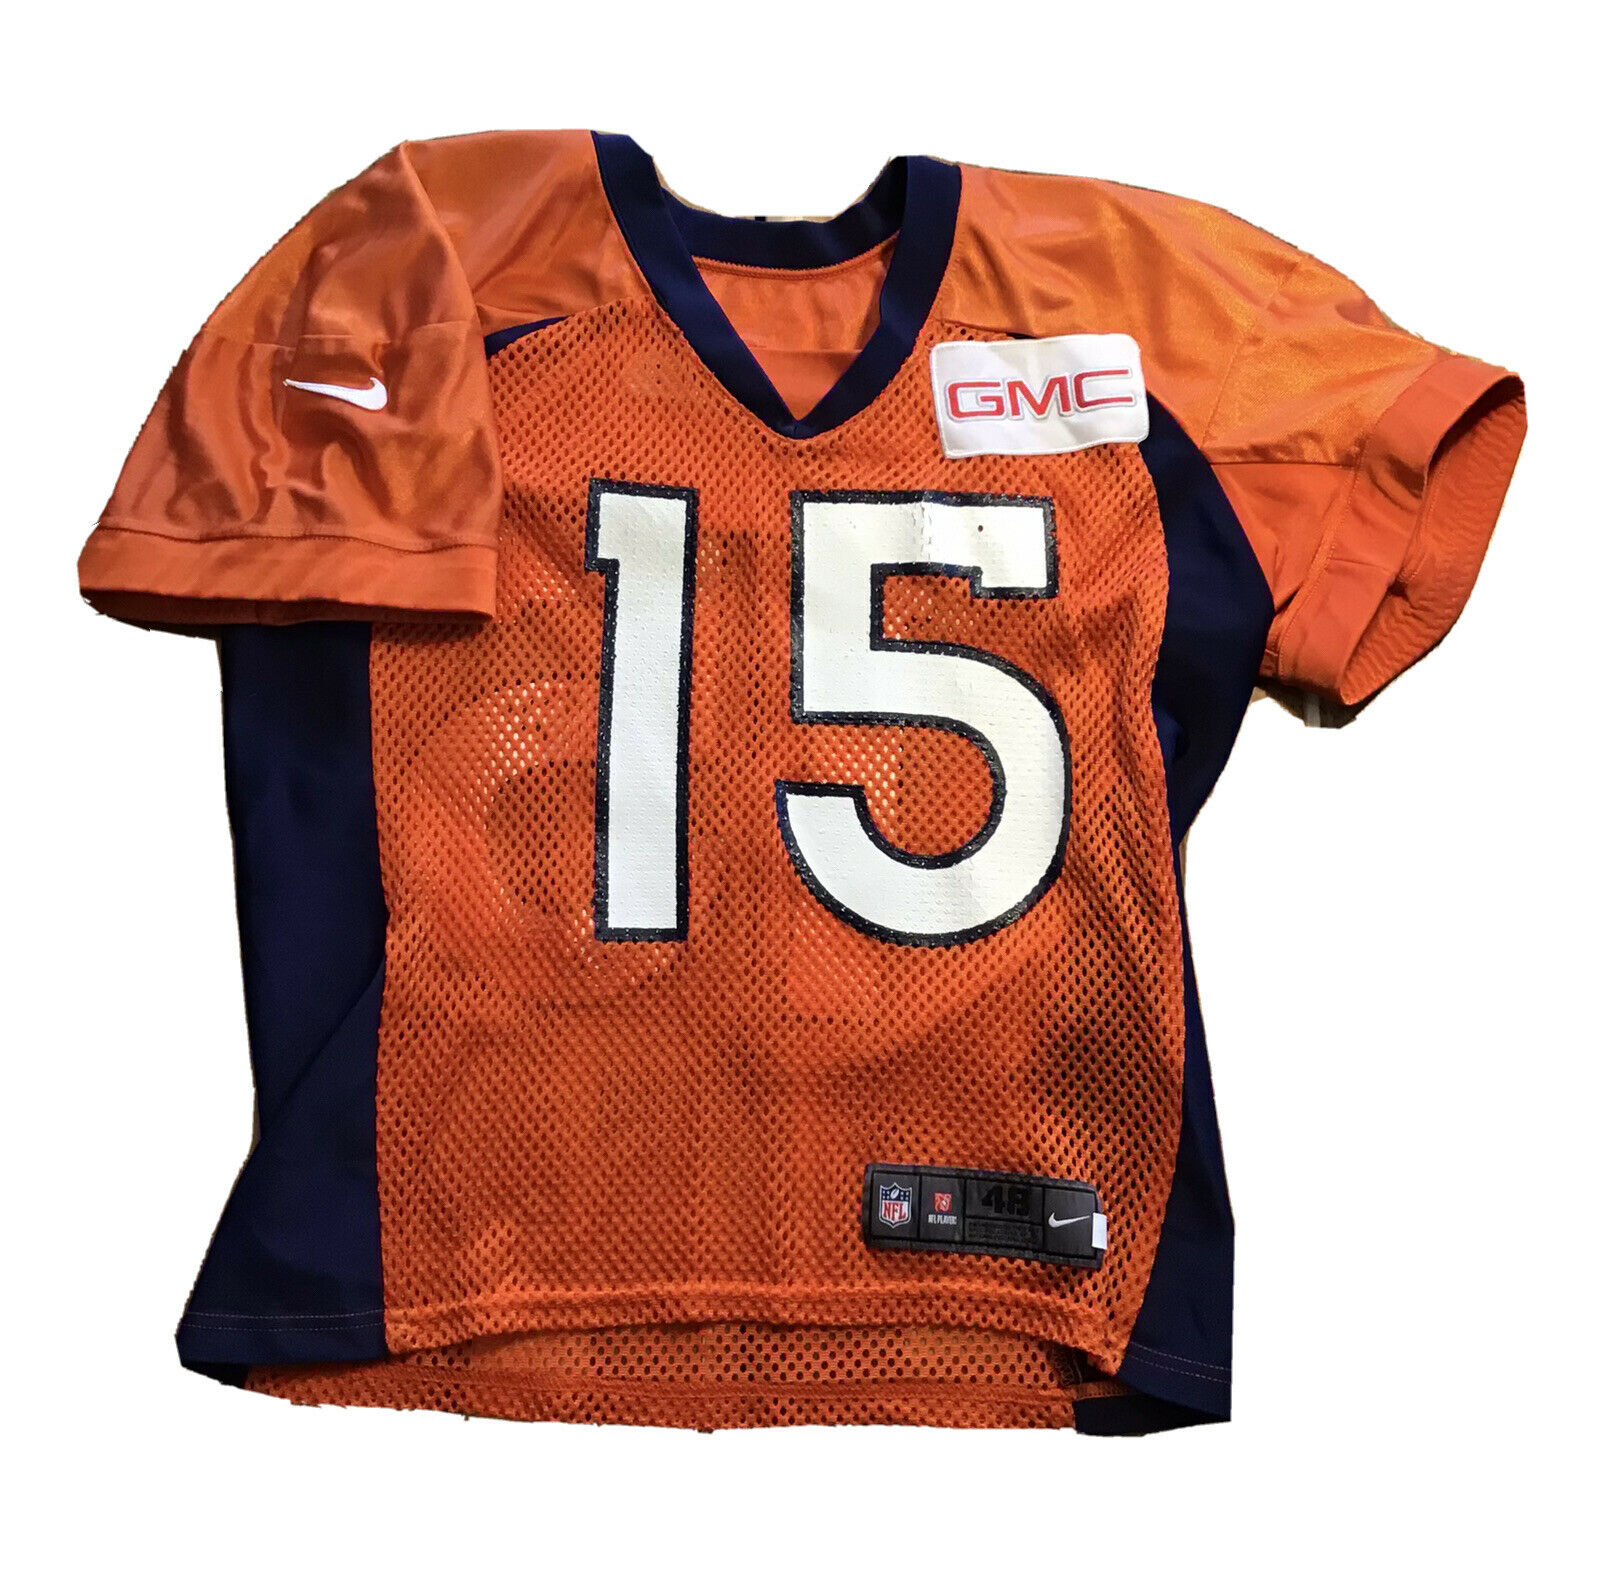 Denver Broncos Player jersey practice pro cut nike Size 48 12-48 S Label GMC